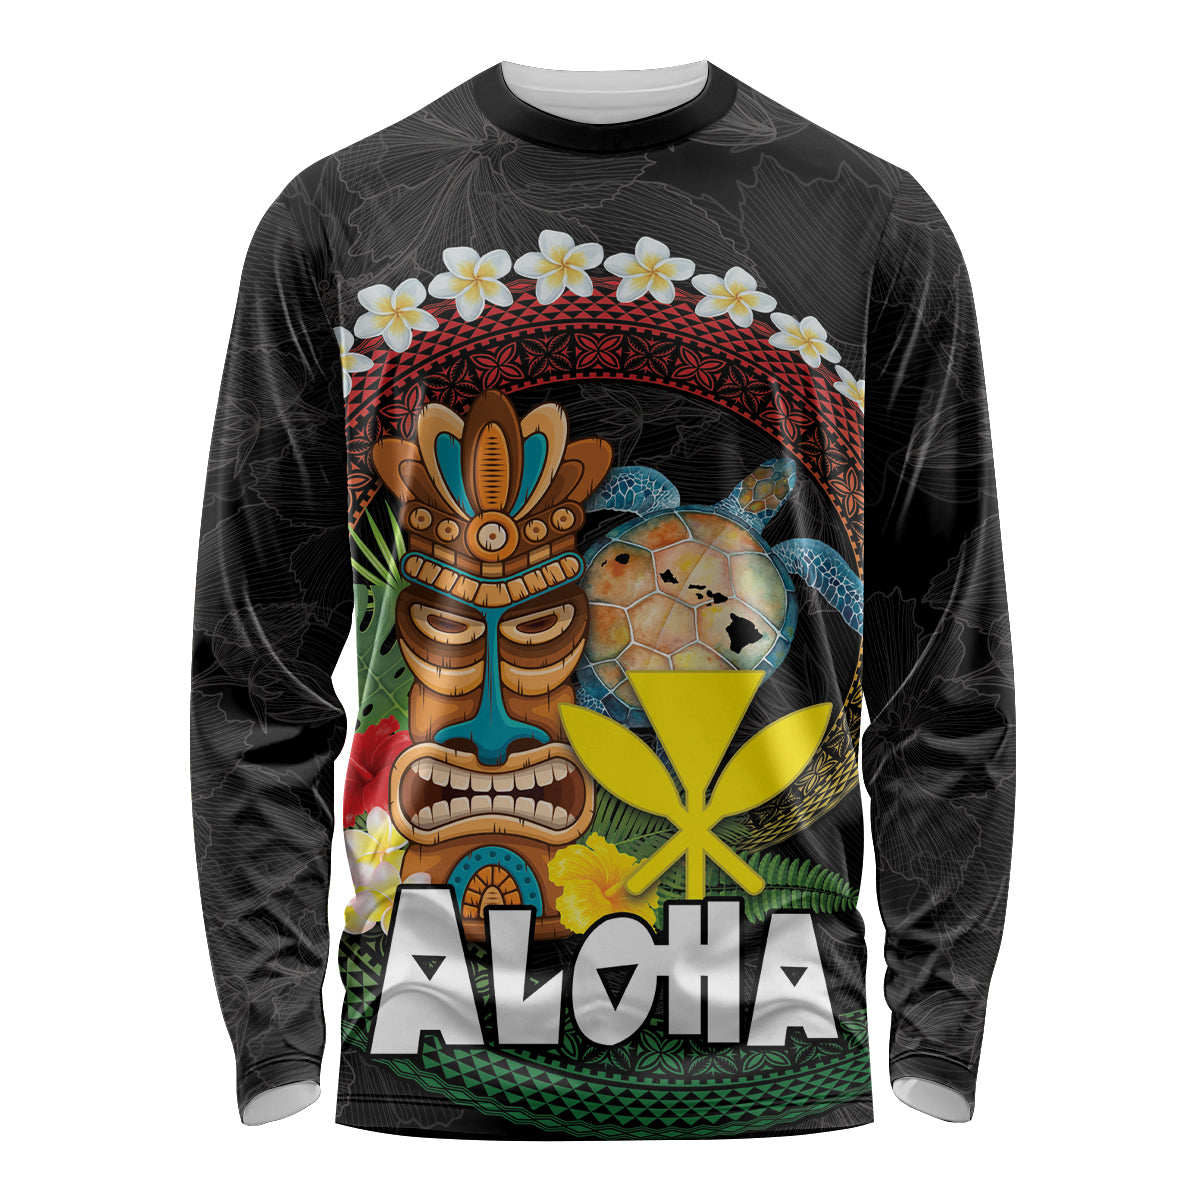 Aloha Hawaii Long Sleeve Shirt Kanaka Maoli with Polynesian Spiral Plumeria